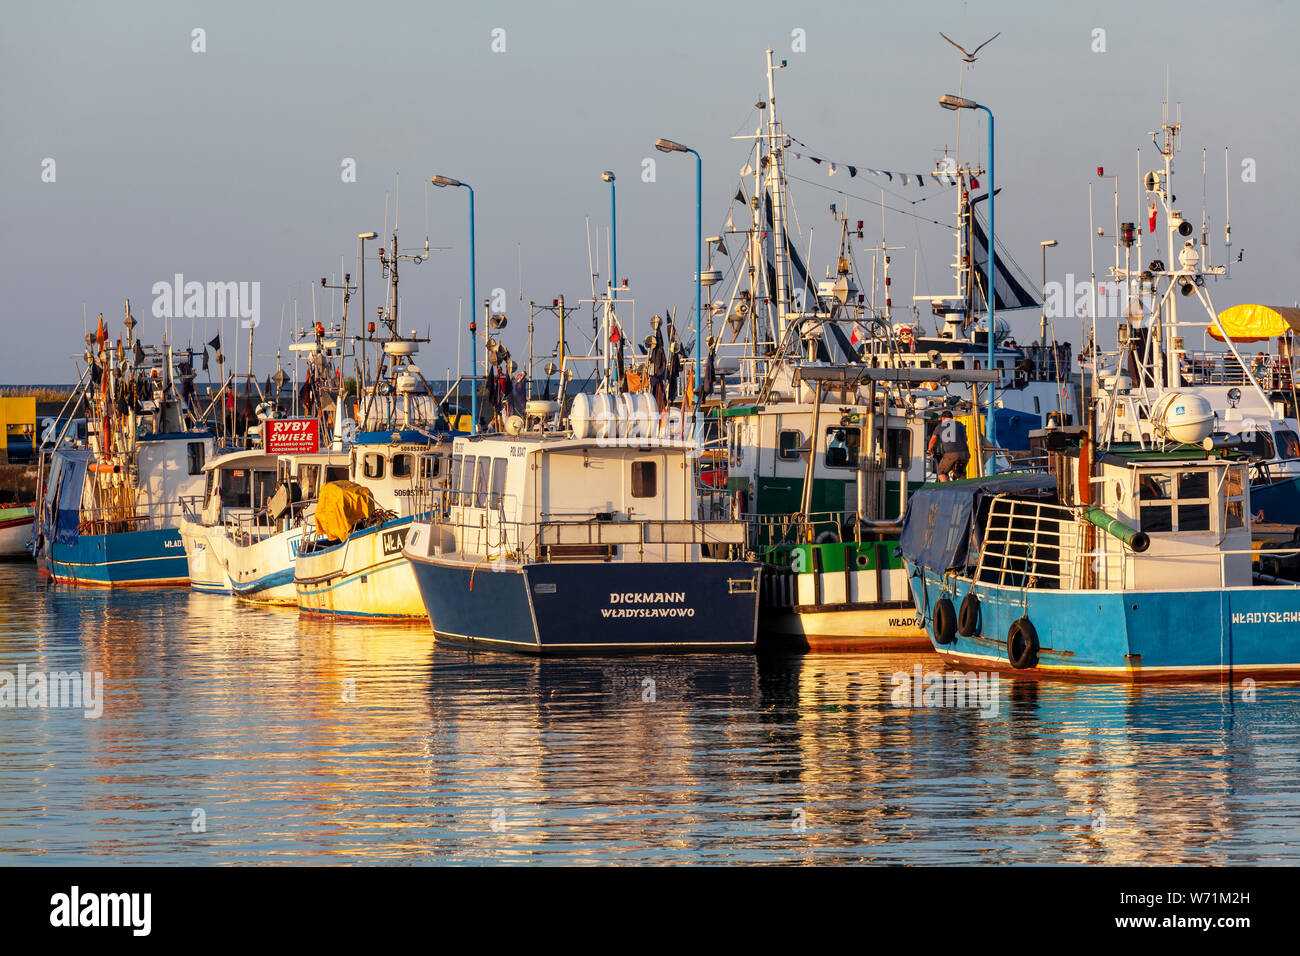 Wladyslawowo, fishing port, Poland Stock Photo